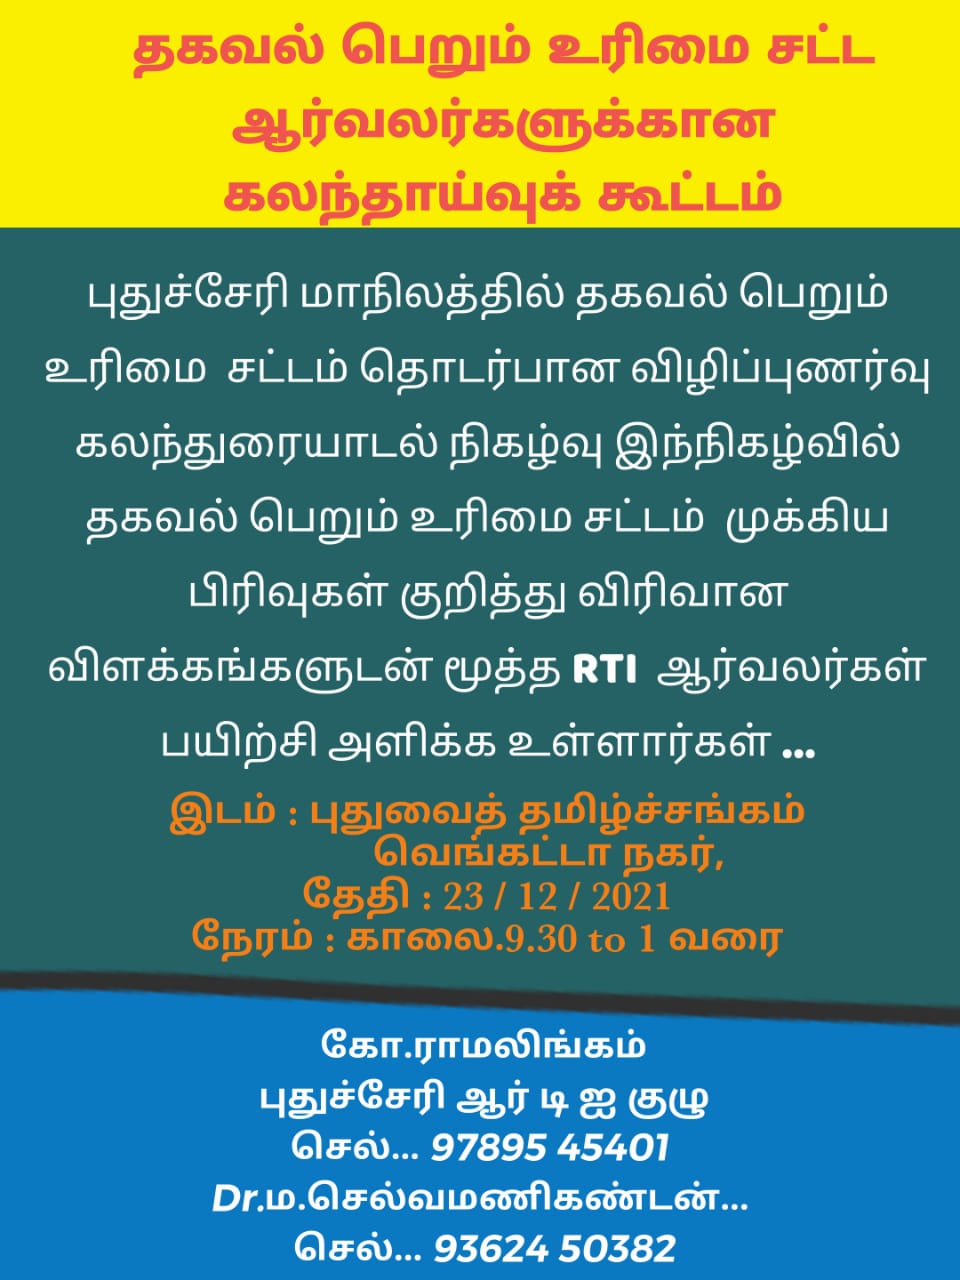 RTI Meeting